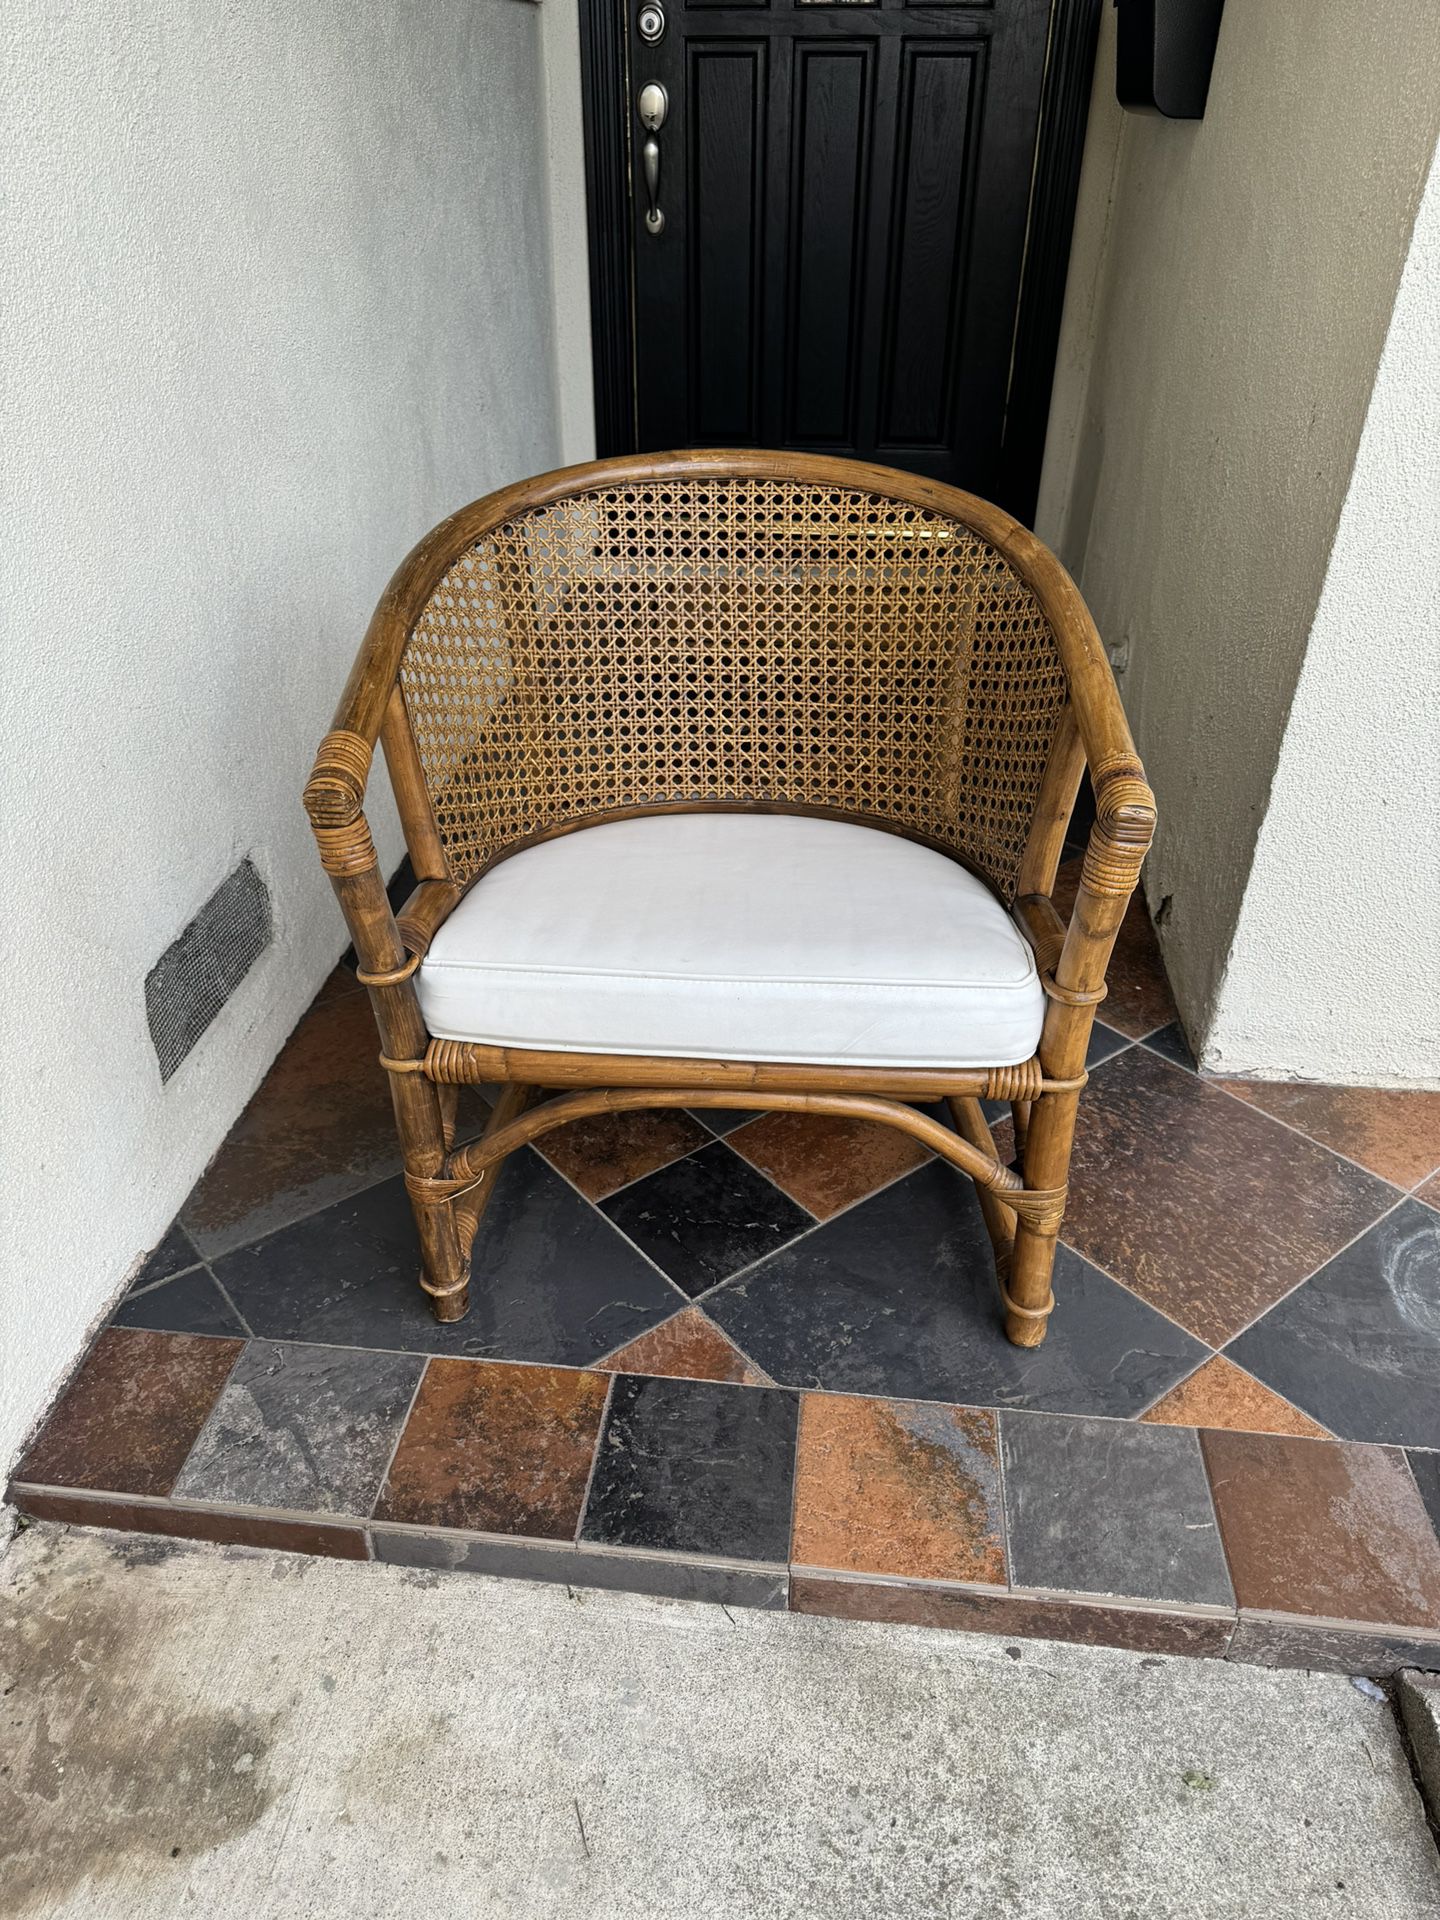 Cane Wicker Chair - Beautiful Chair